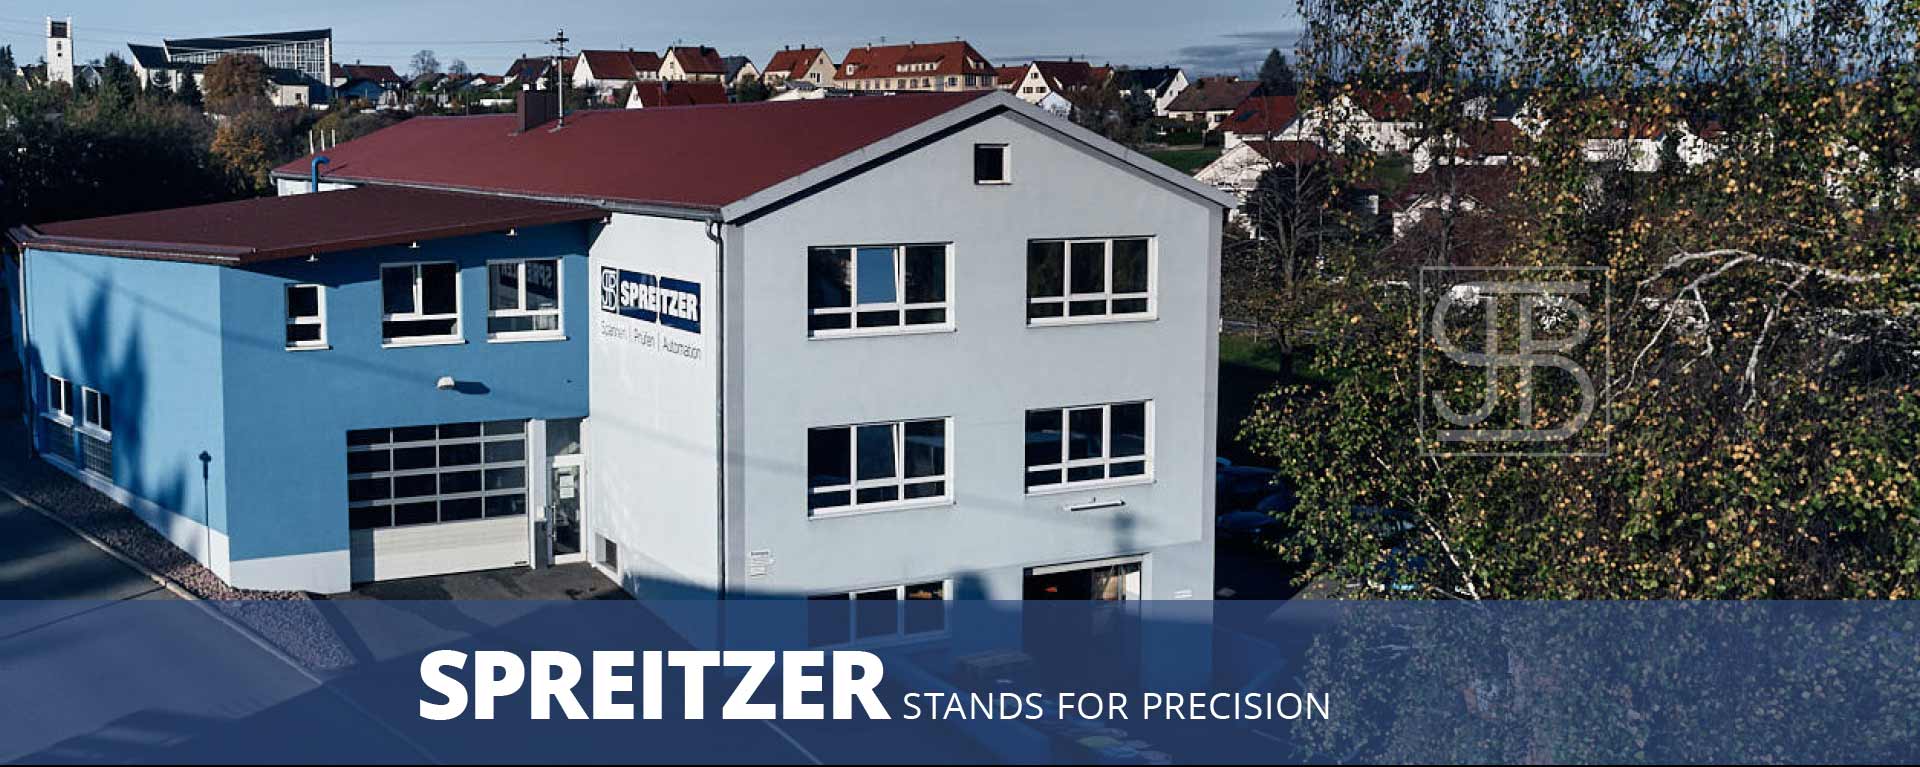 Company building of Spreitzer at Gosheim